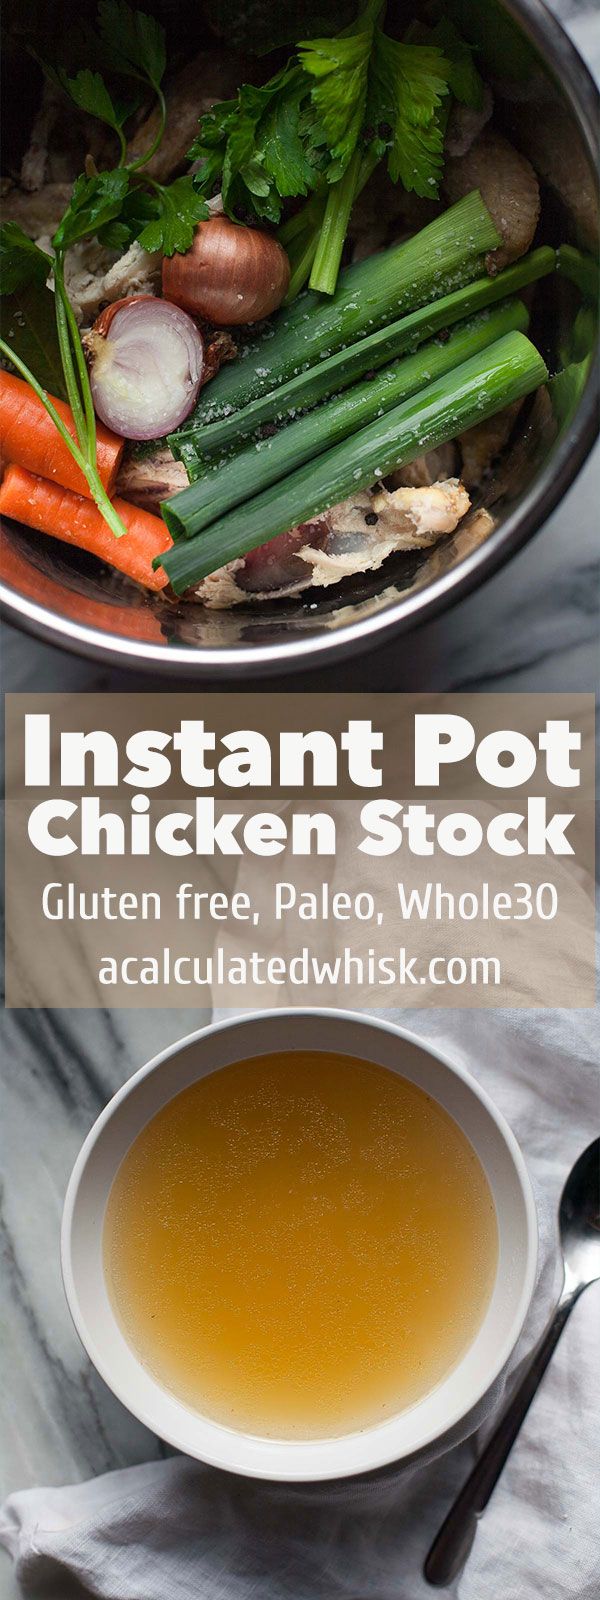 Instant Pot Chicken Stock